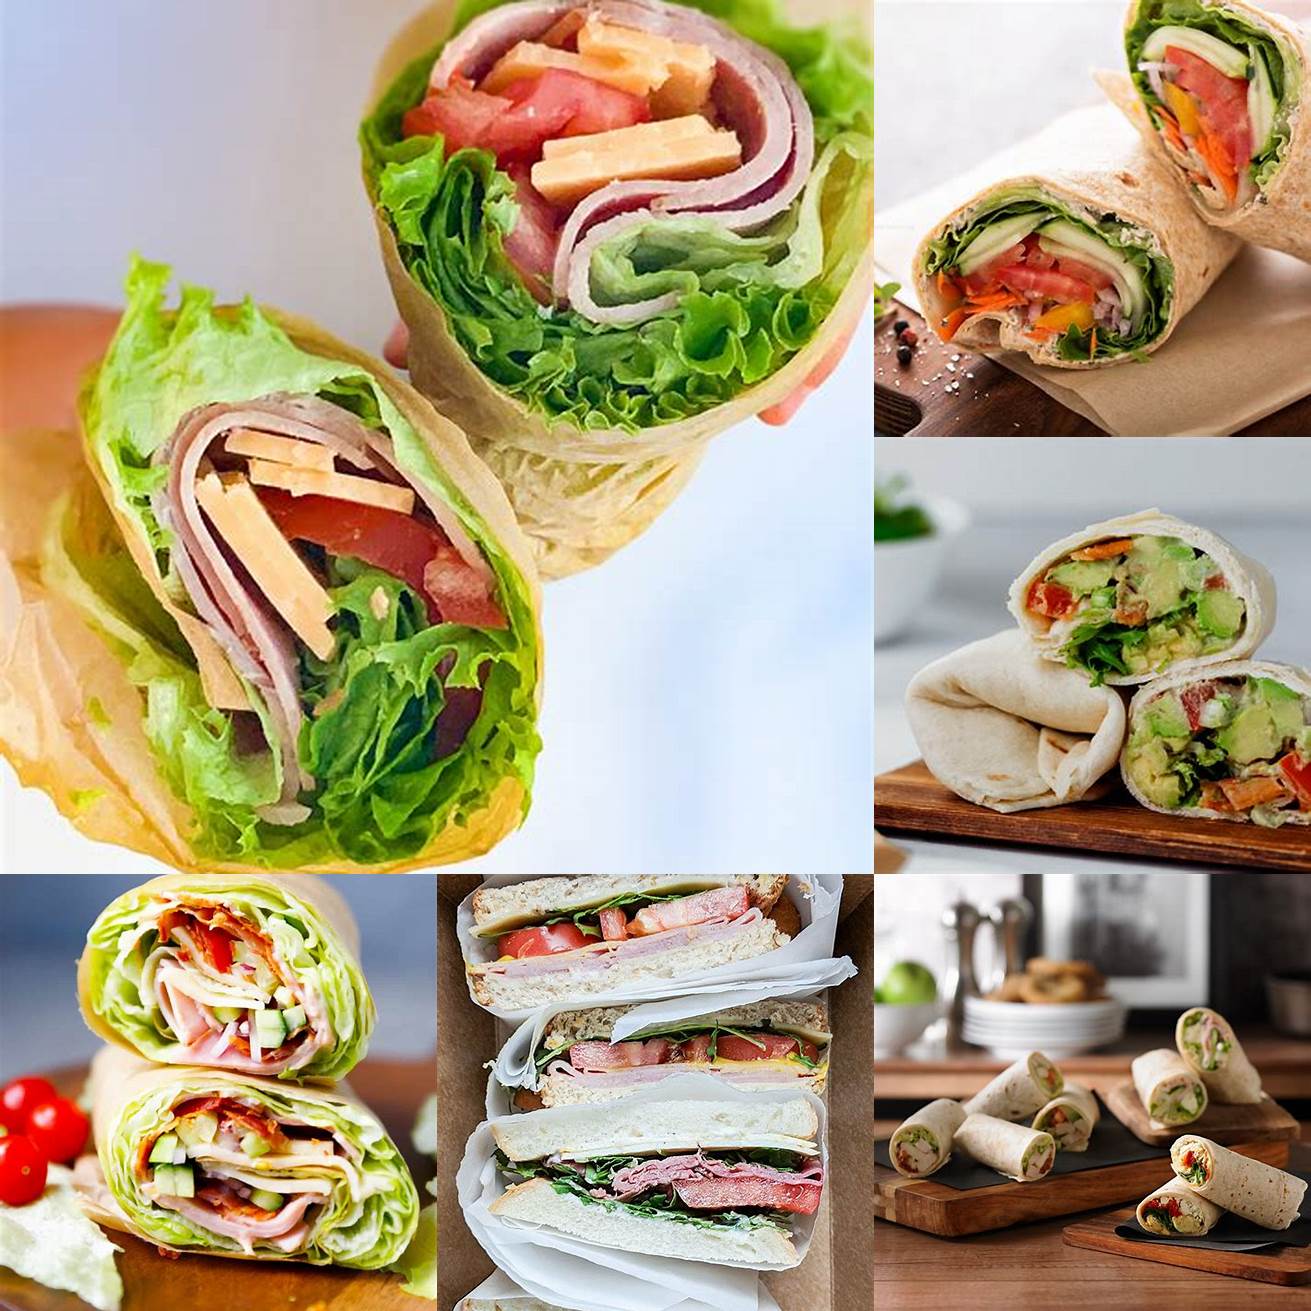 Create a sandwich or wrap